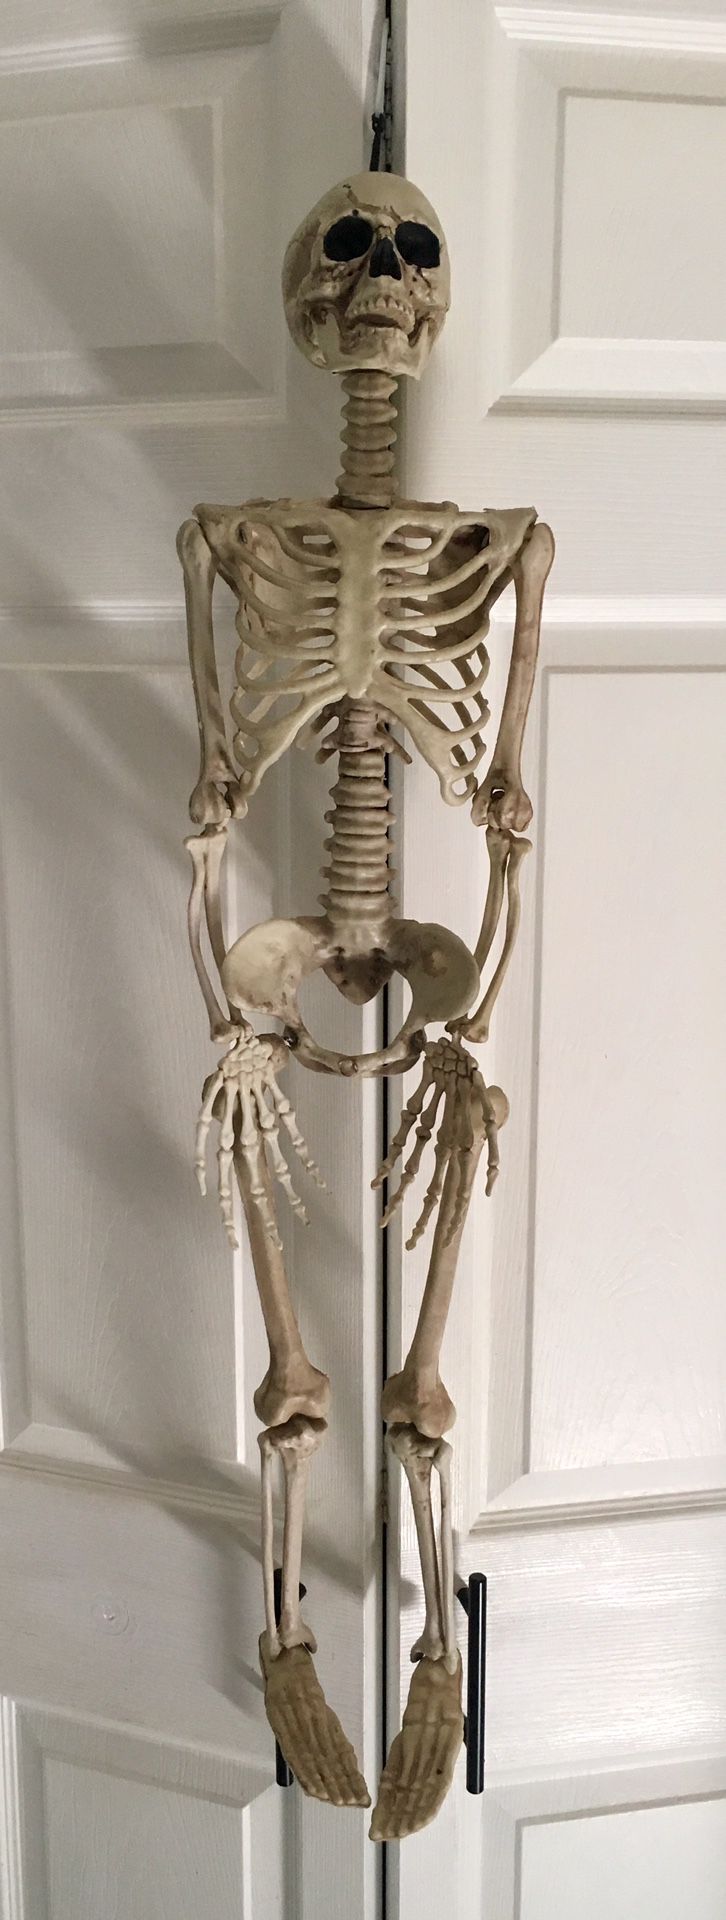 3ft Hanging Skeleton Figure for Halloween Decor